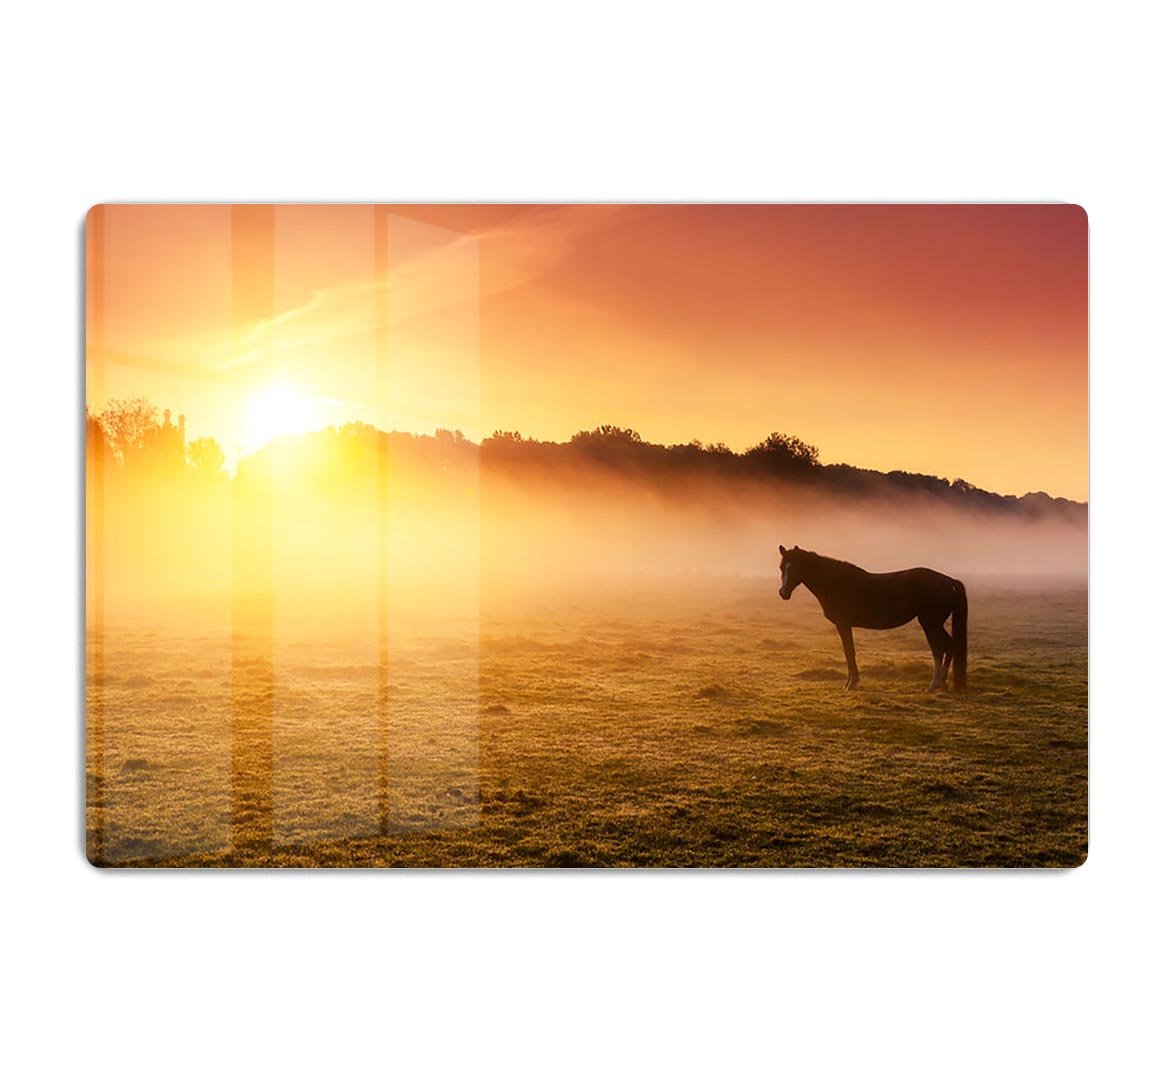 Arabian horses grazing on pasture at sundown in orange sunny beams. Dramatic foggy scene HD Metal Print - Canvas Art Rocks - 1